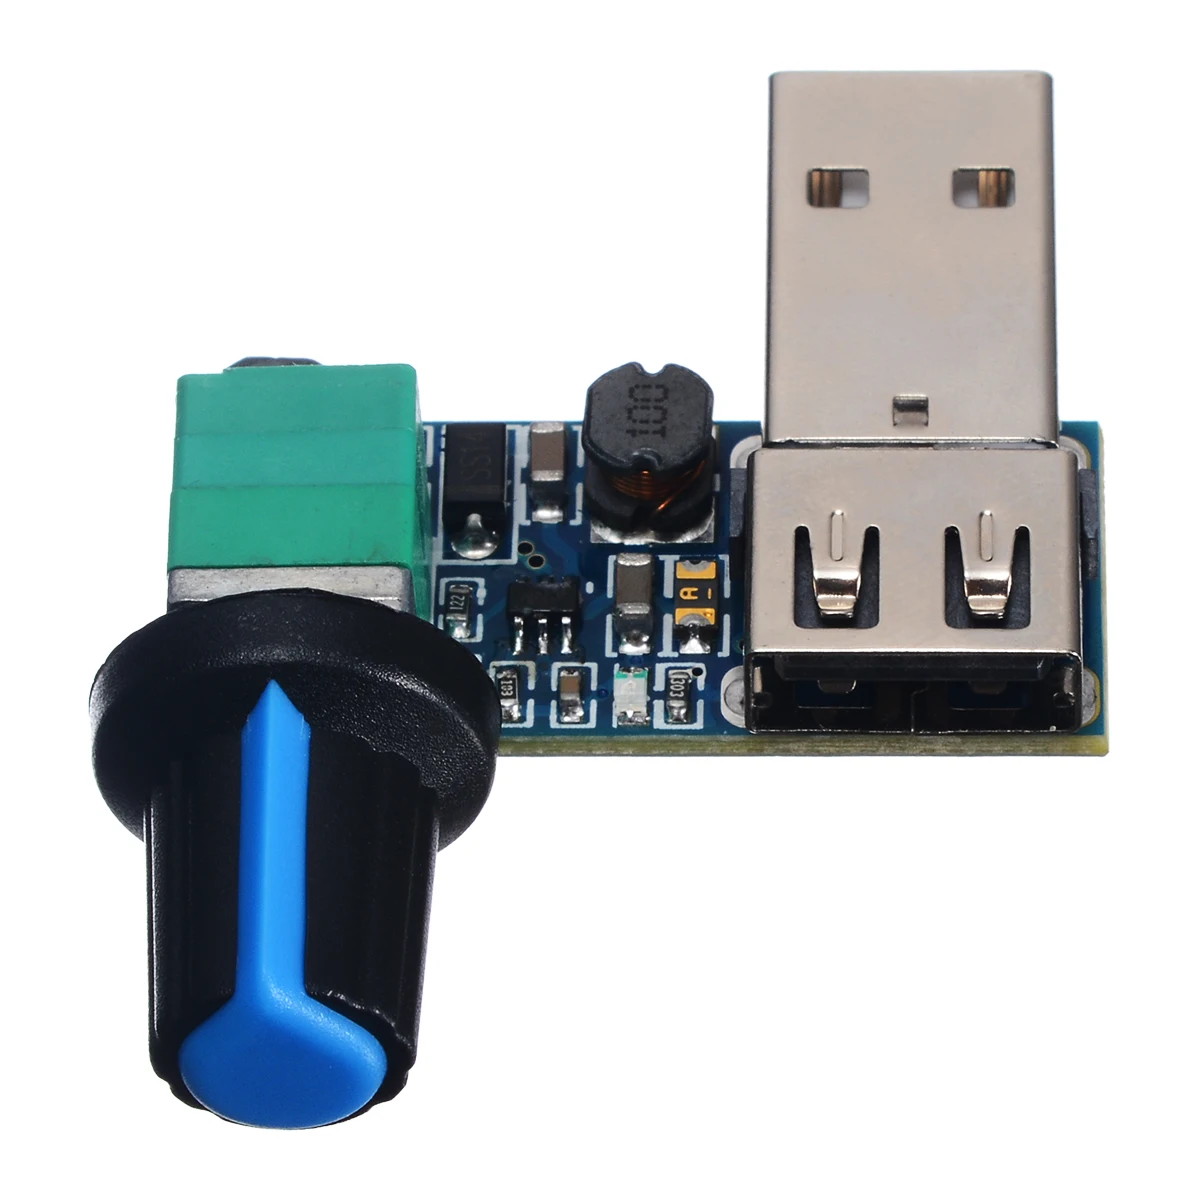 5V to 12V USB Fan Stepless Speed Controller Regulator Variable Switch Module UK 